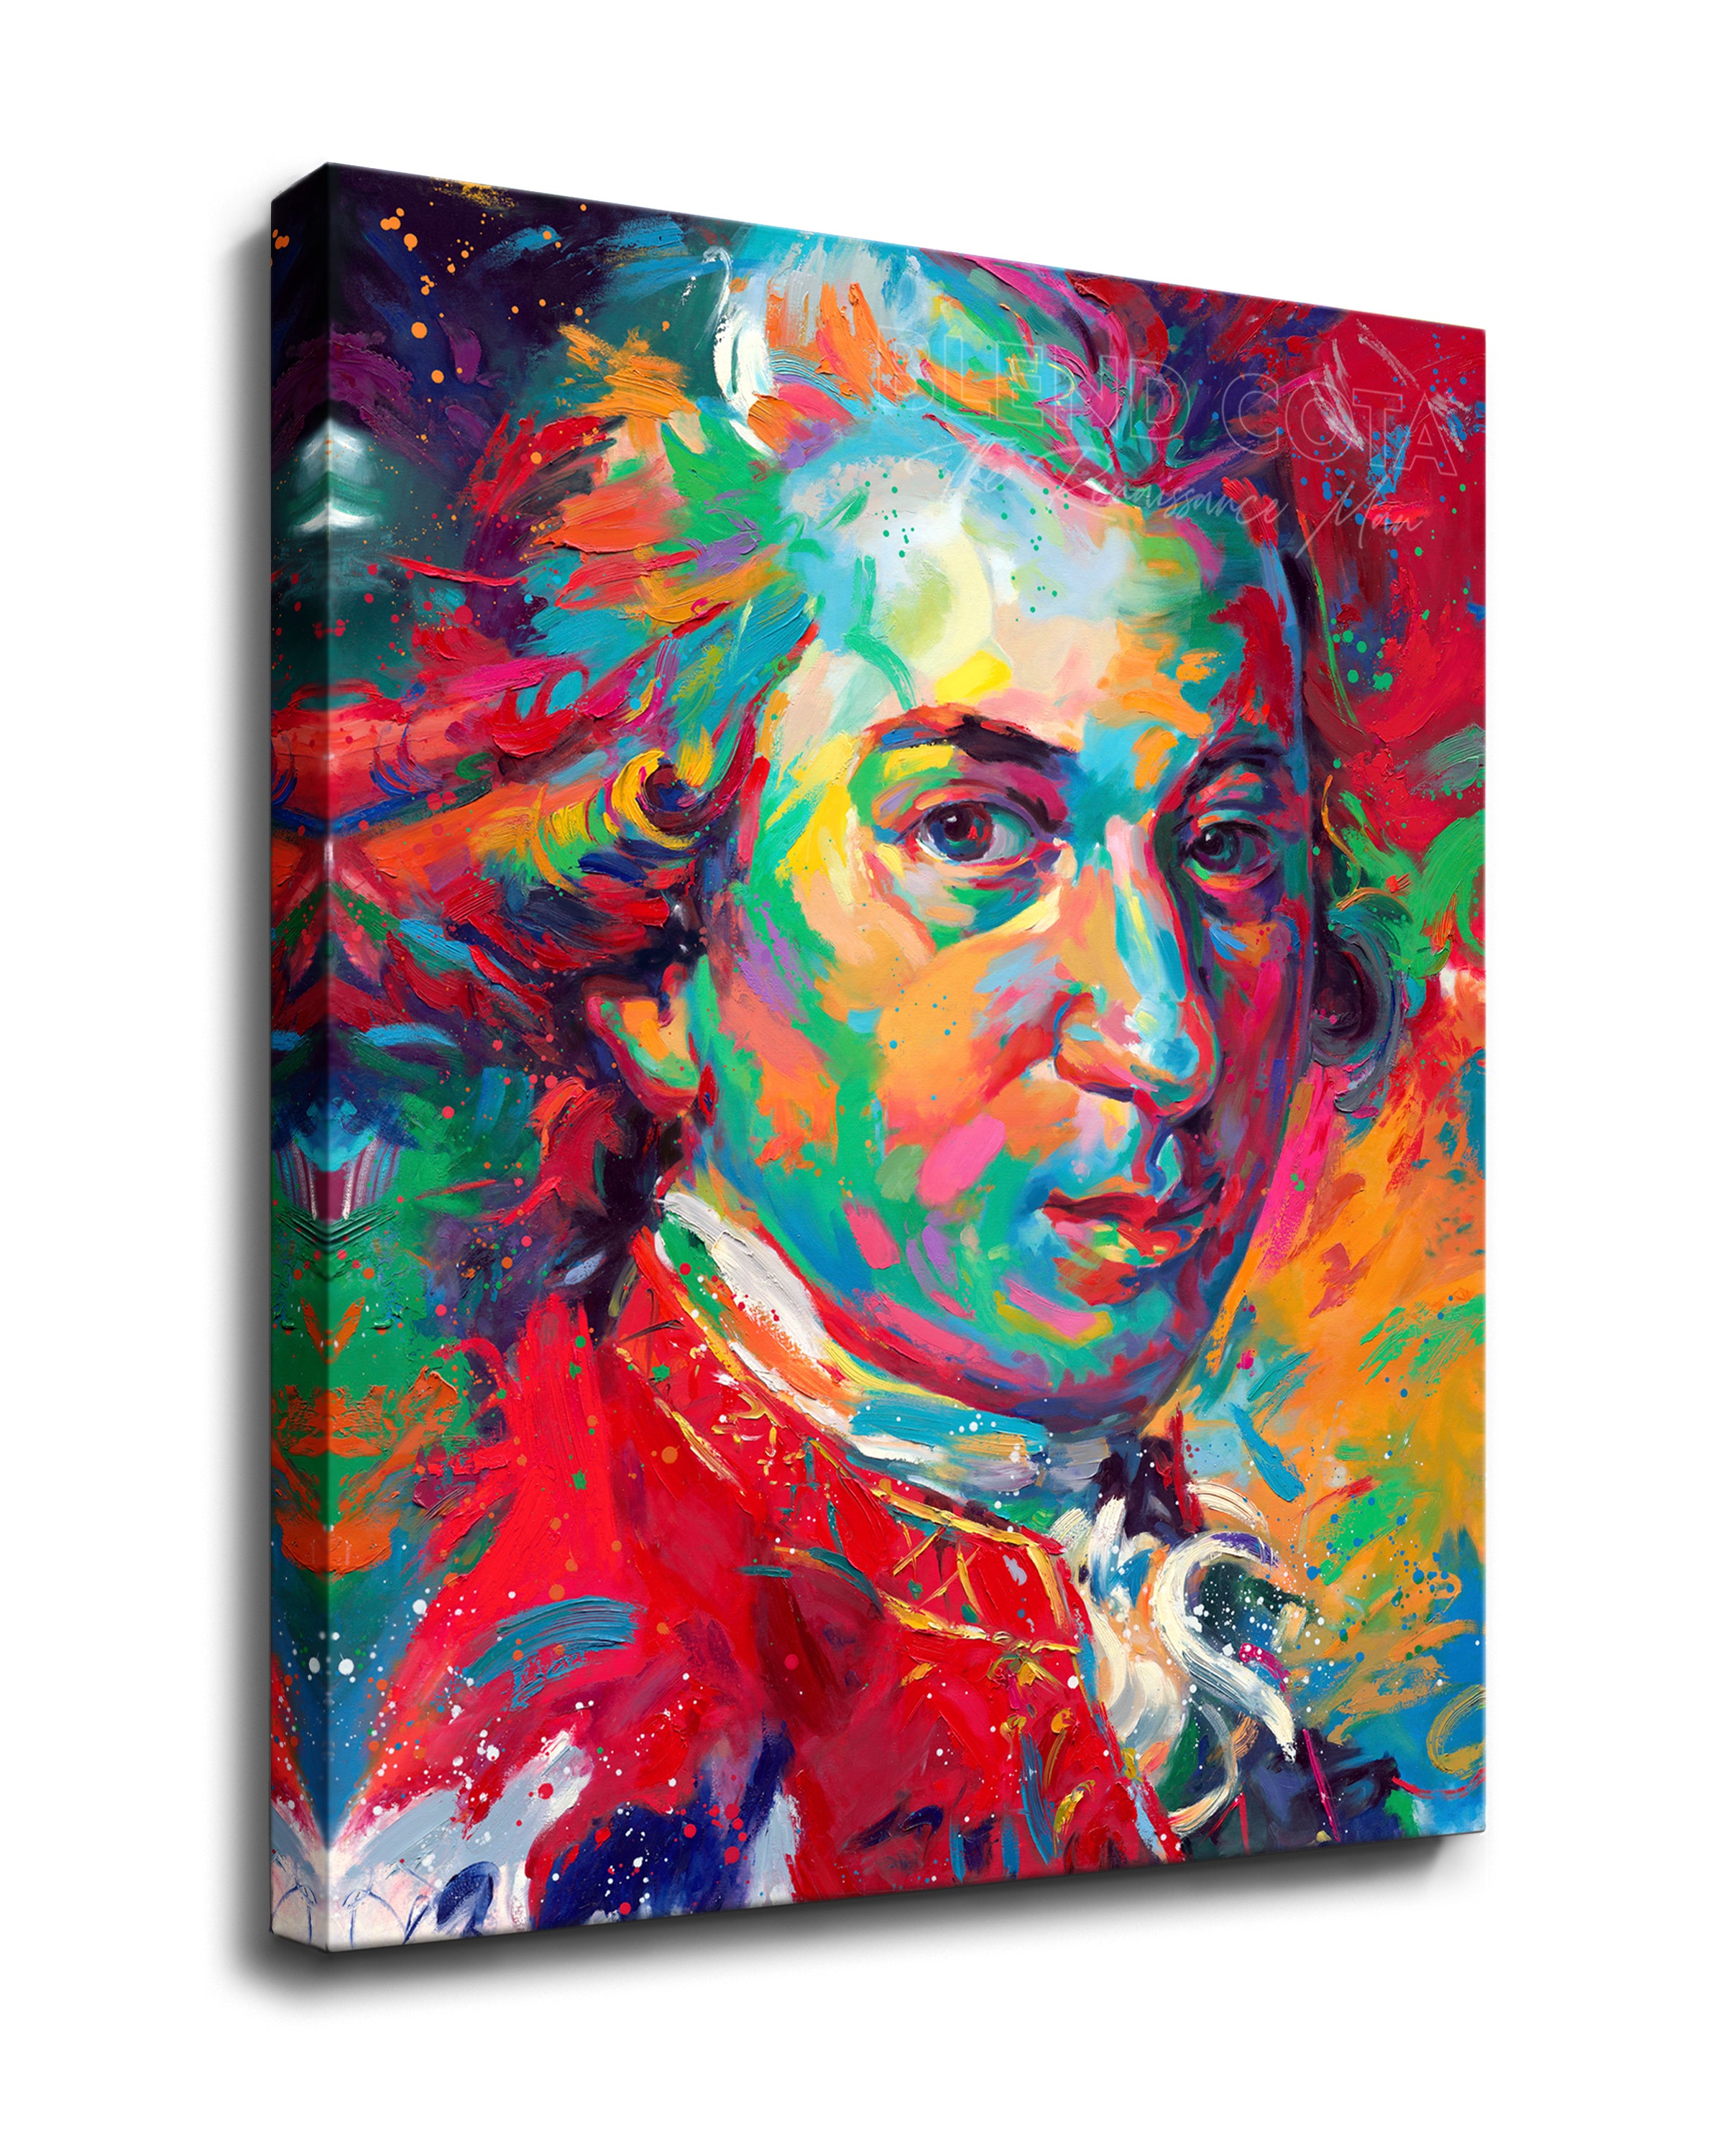 Mozart - Requiem Unfinished - Blend Cota Art Print on Canvas - Blend Cota Studios